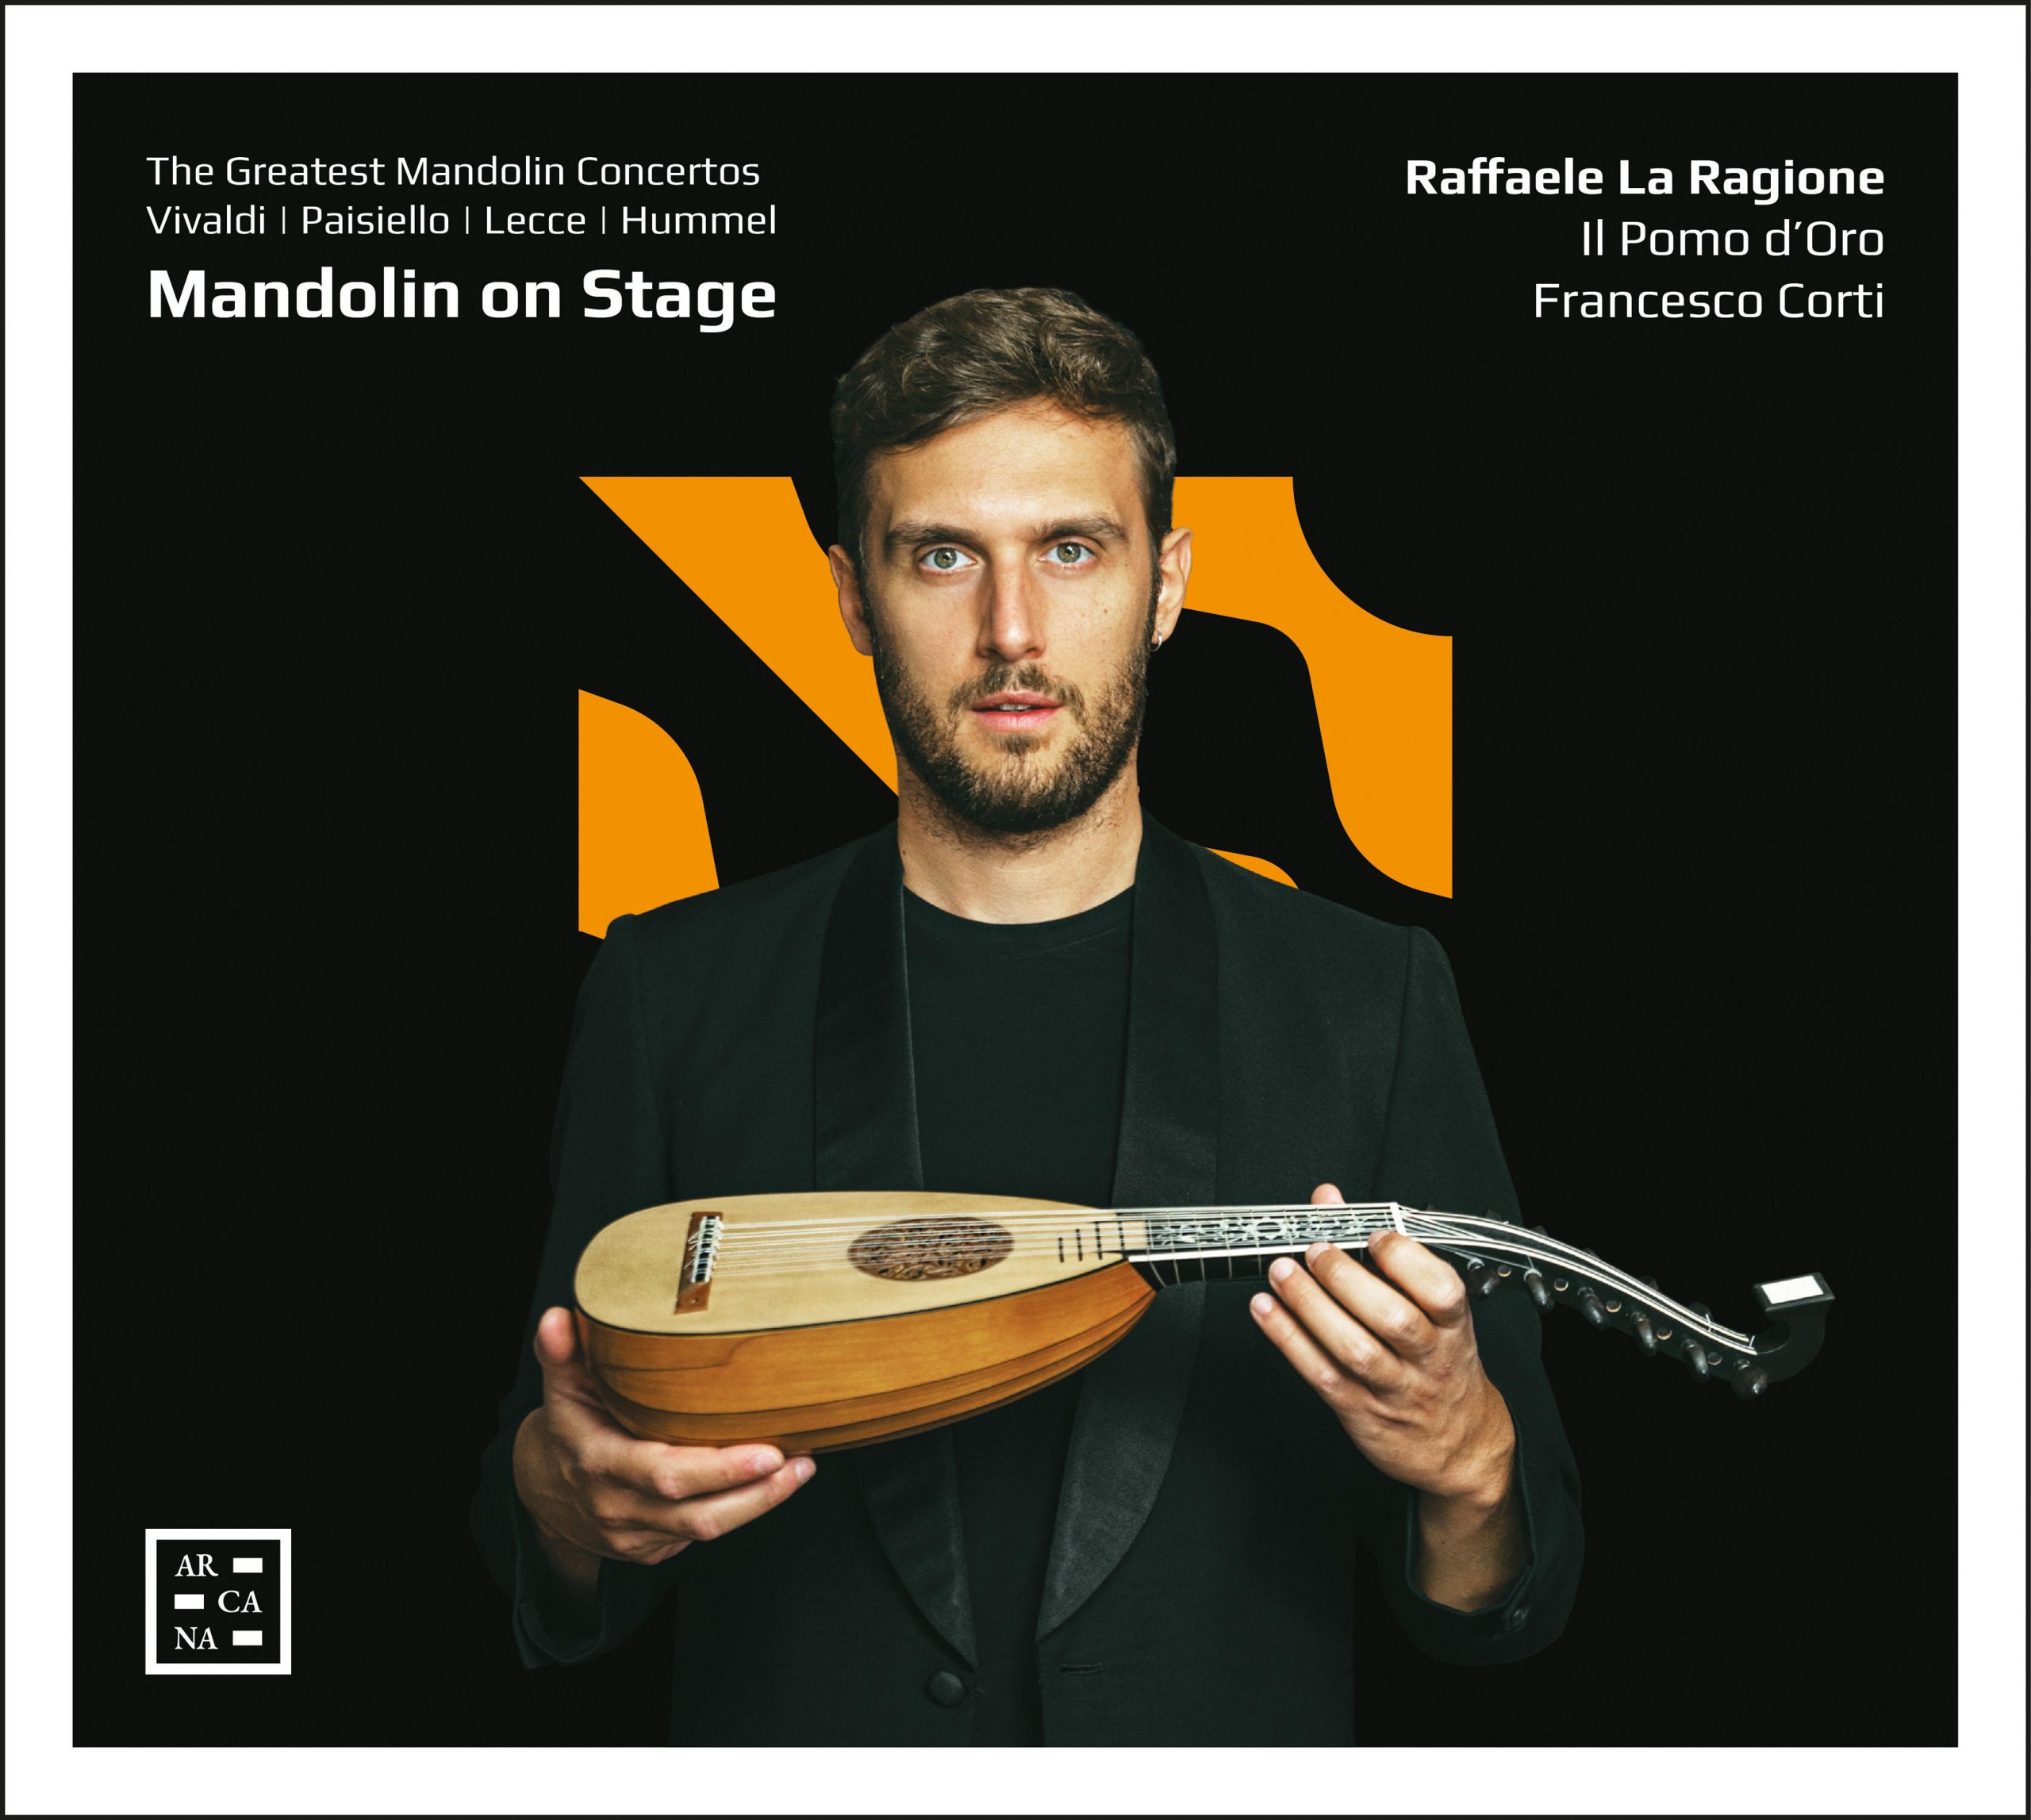 mandolin on stage - raffaele la ragione